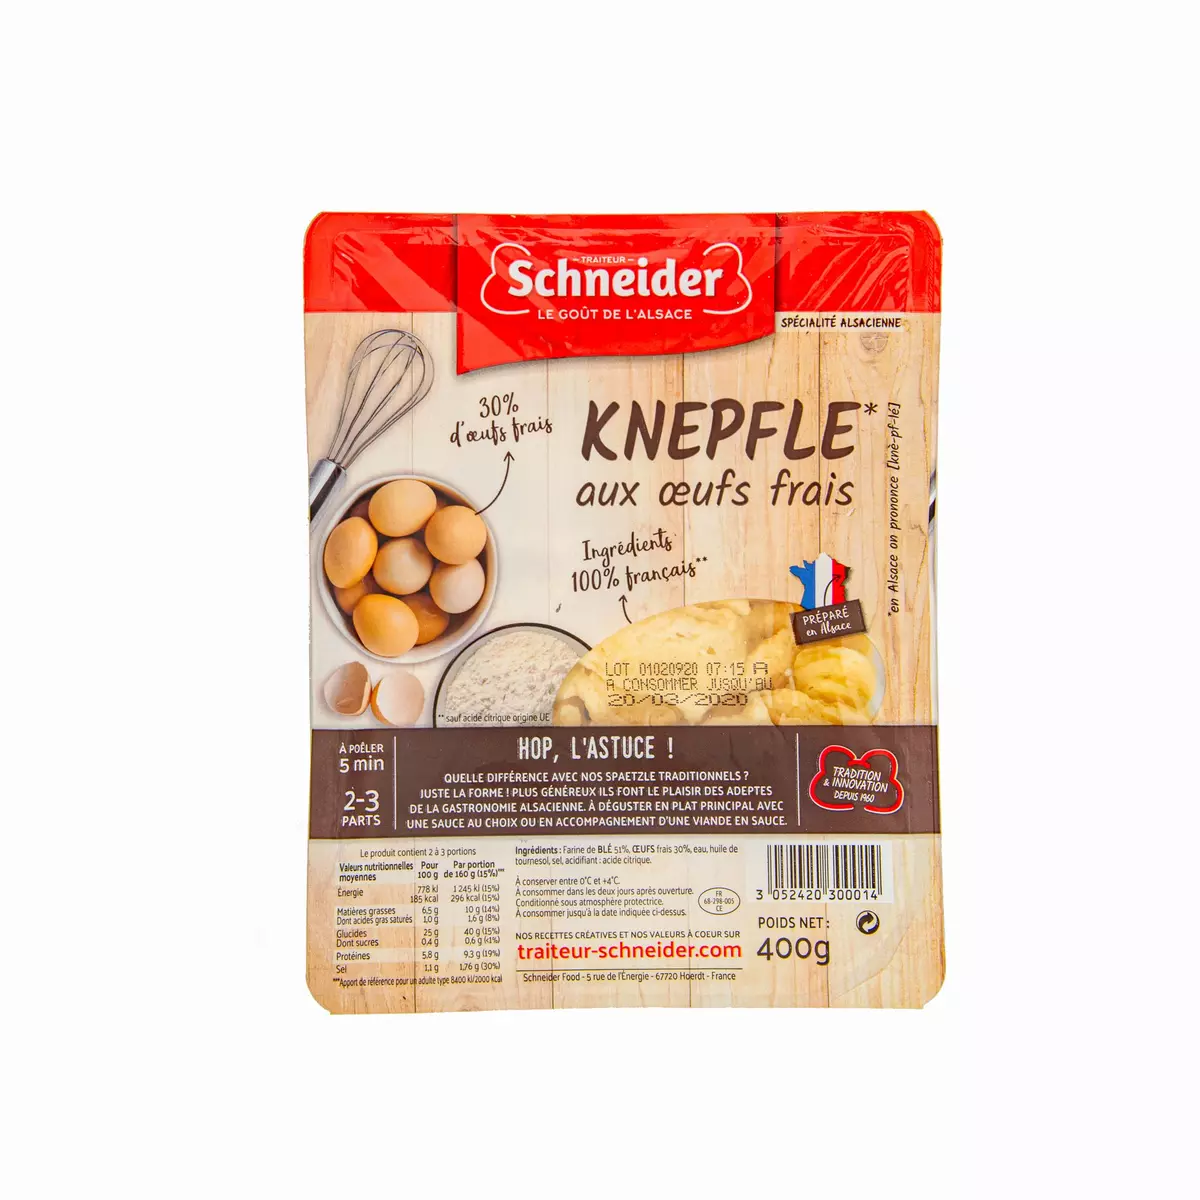 SCHNEIDER Knepfle aux oeufs frais 2-3 portions 400g